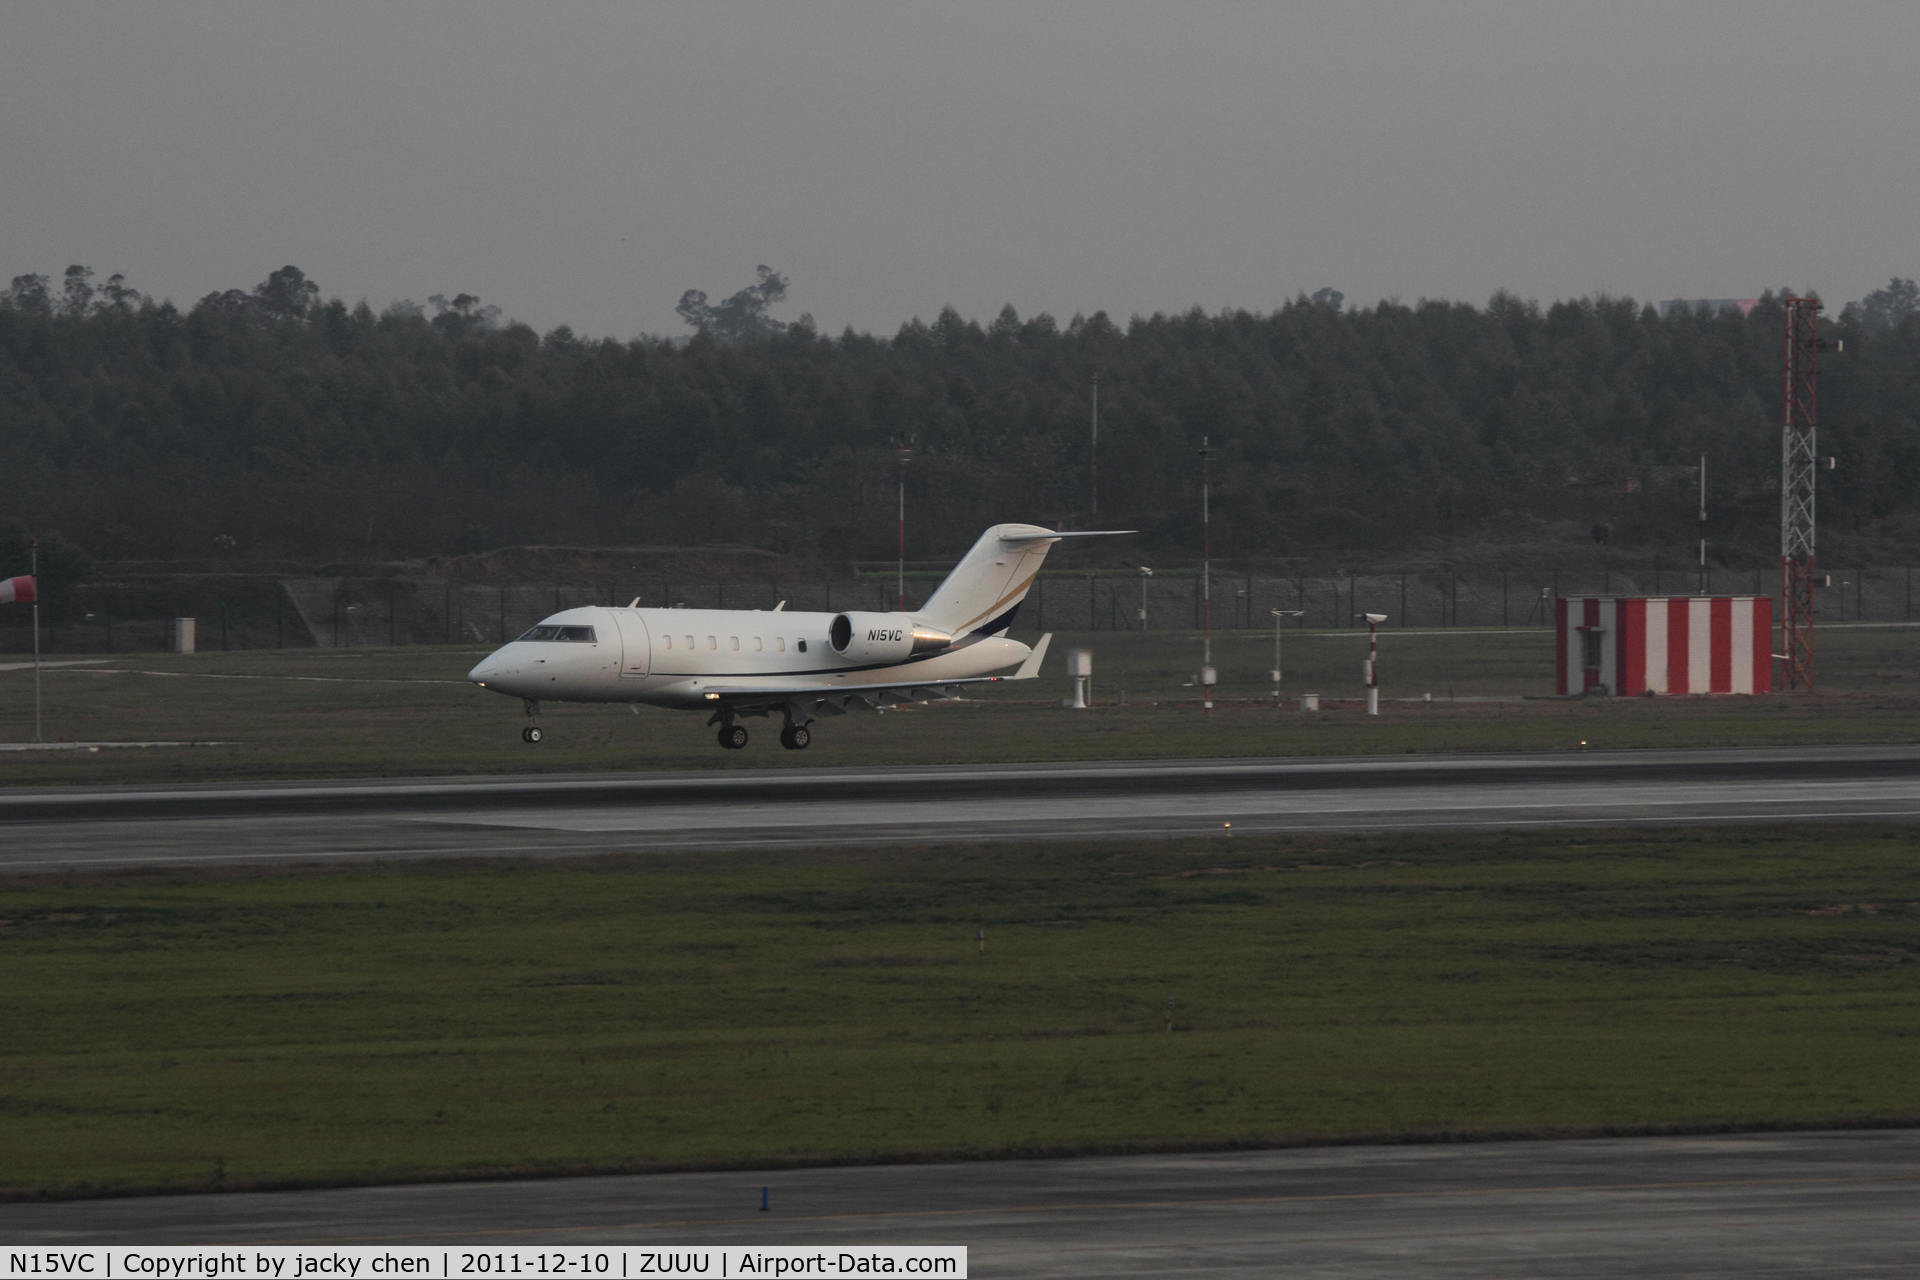 N15VC, 2009 Bombardier Challenger 605 (CL-600-2B16) C/N 5816, shuangliu airport,chengdu sichuan china
10-12-2011,16:43